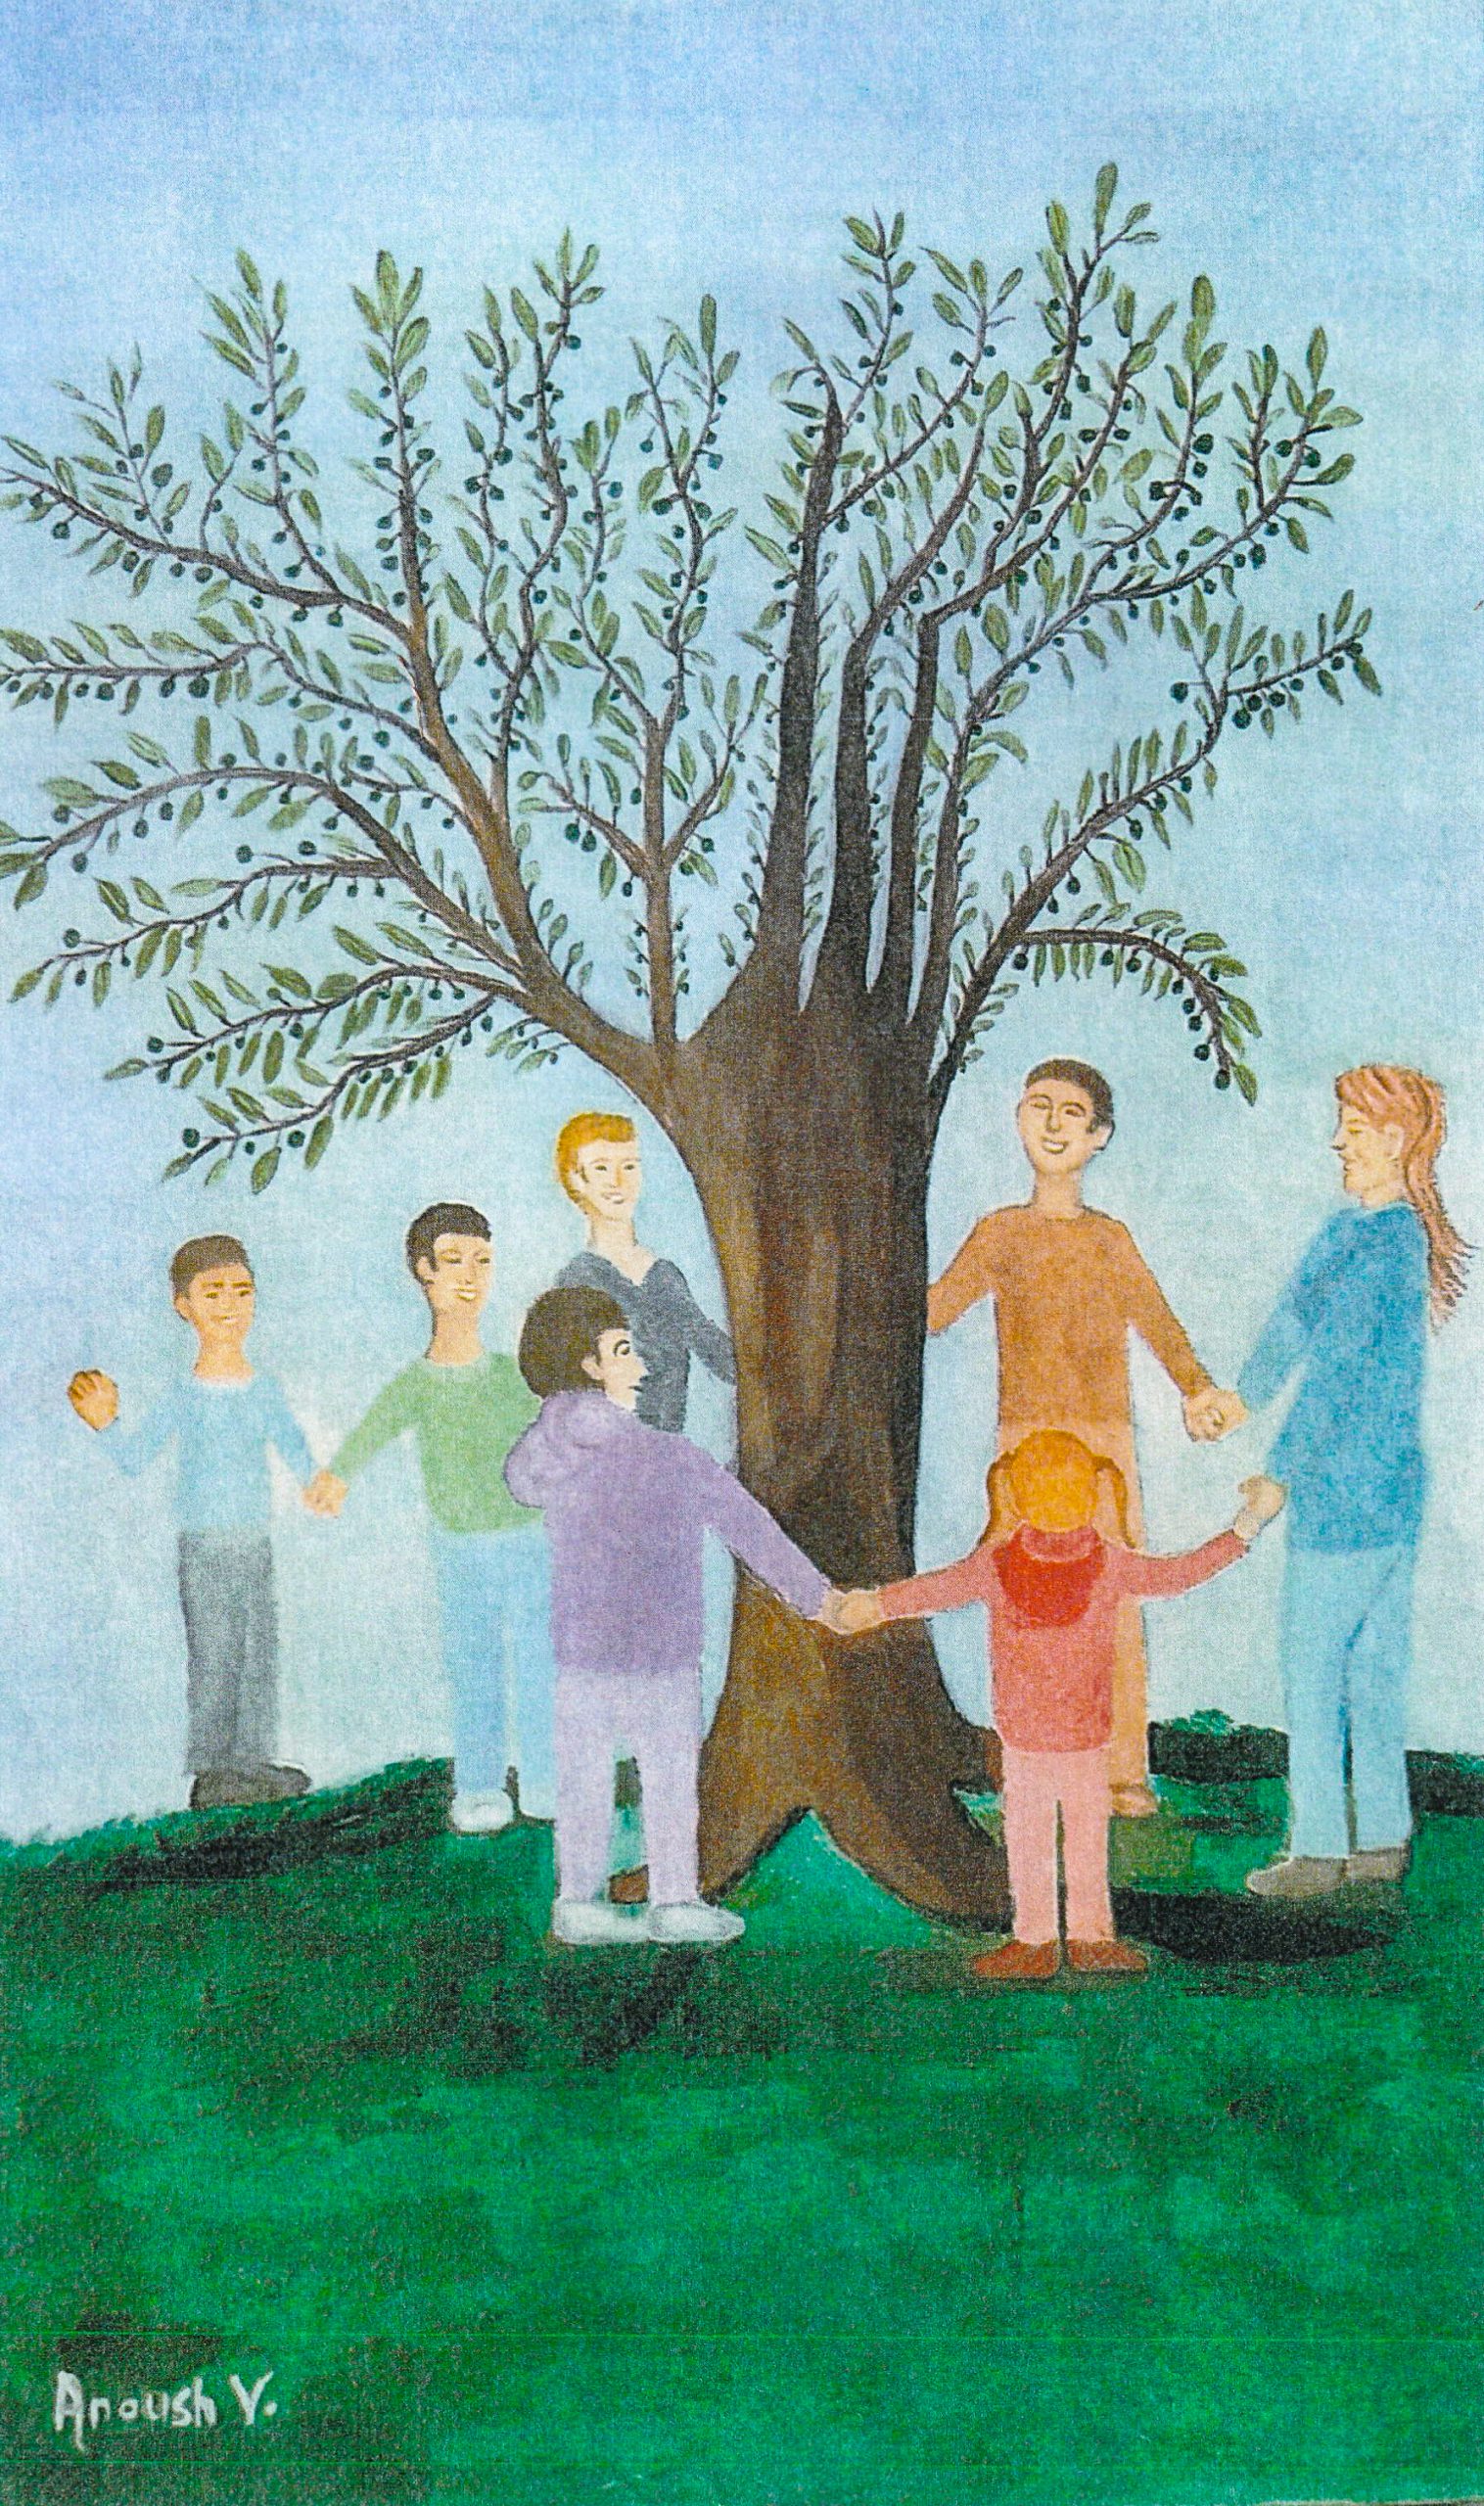 Painting of children around a tree